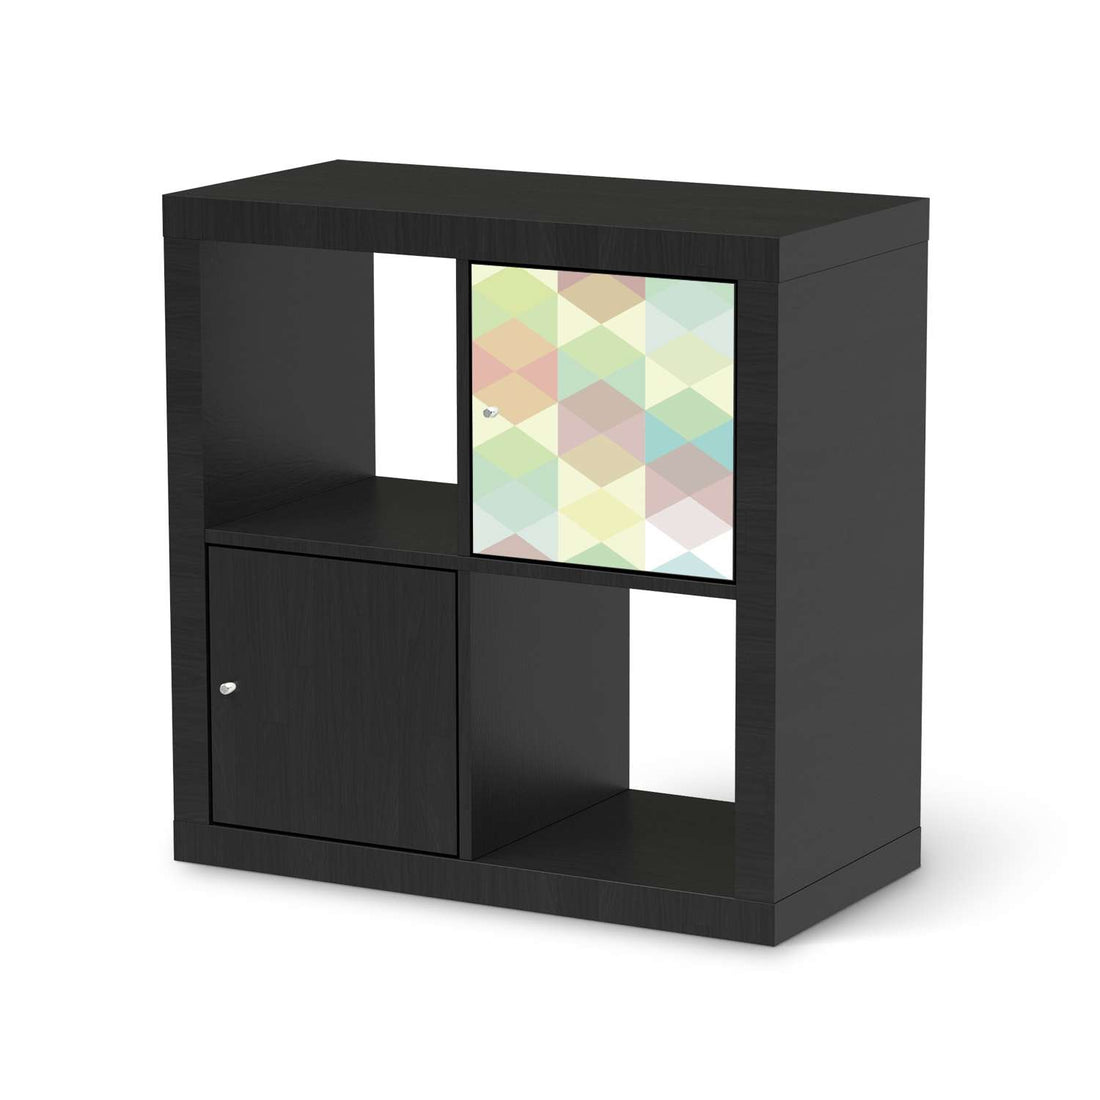 Selbstklebende Folie Melitta Pastell Geometrie - IKEA Kallax Regal 1 Türe - schwarz